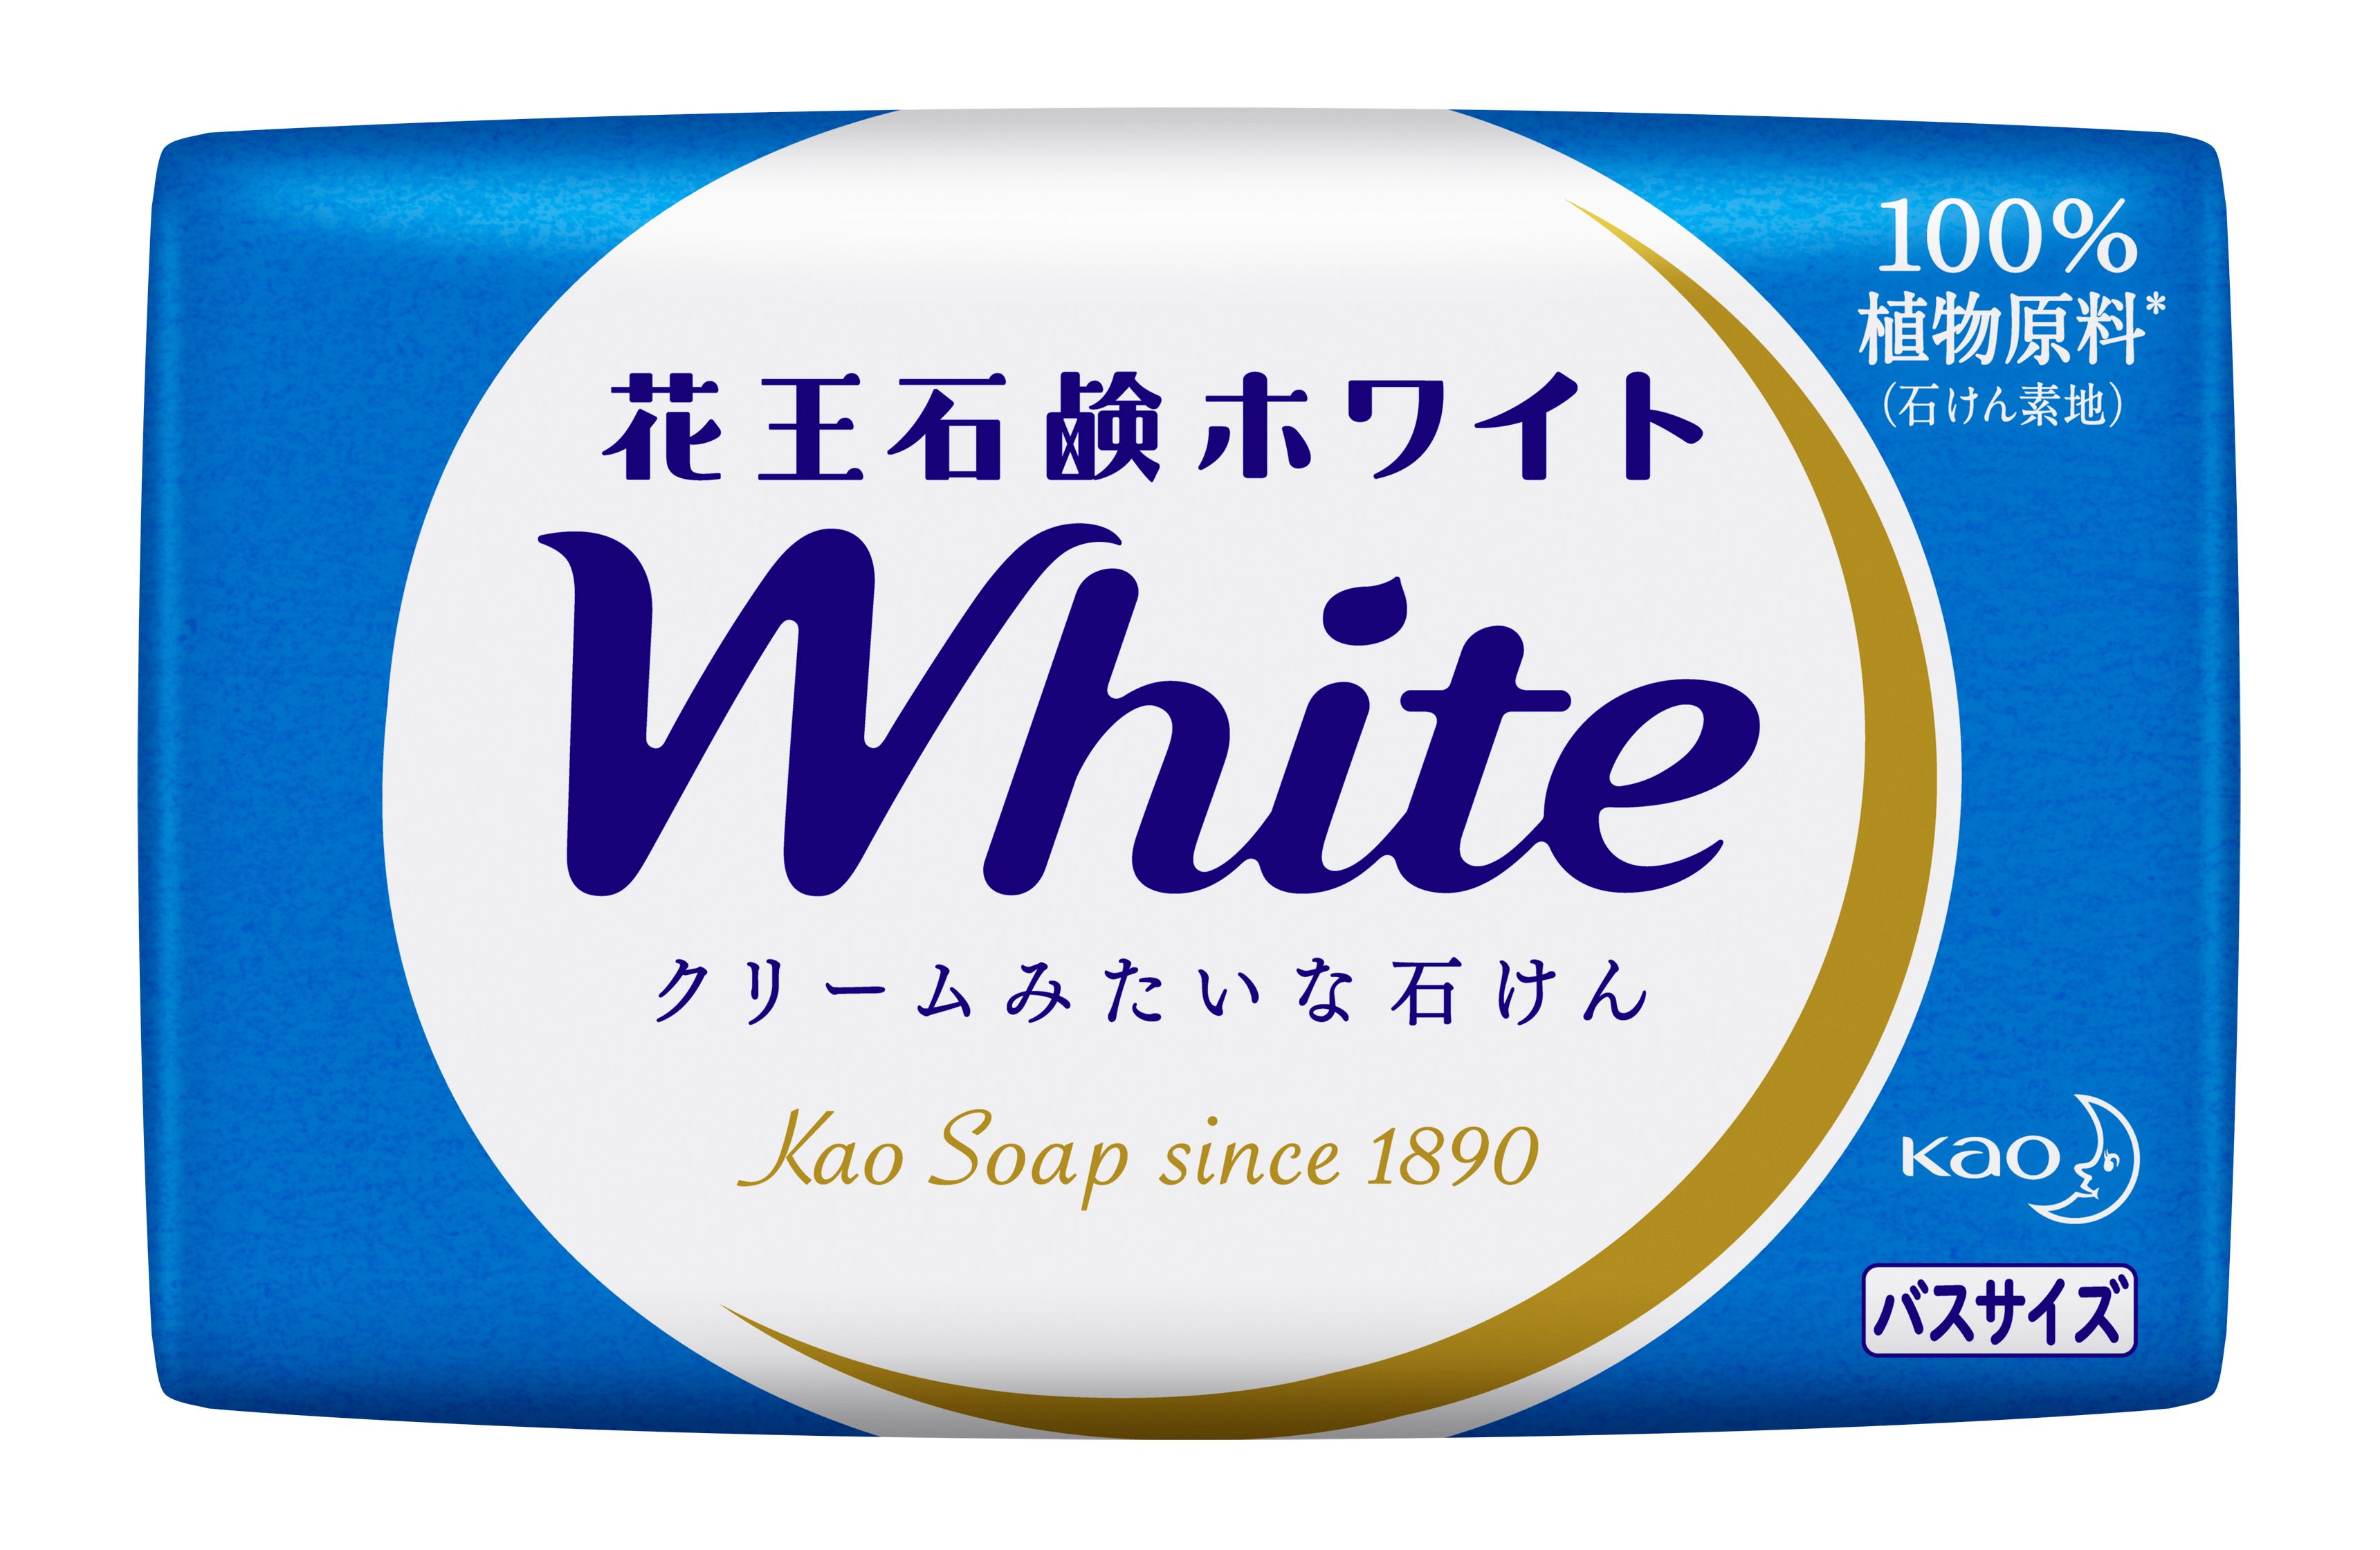 Kao Corporation|Product Information|花王石鹸ホワイト バスサイズ